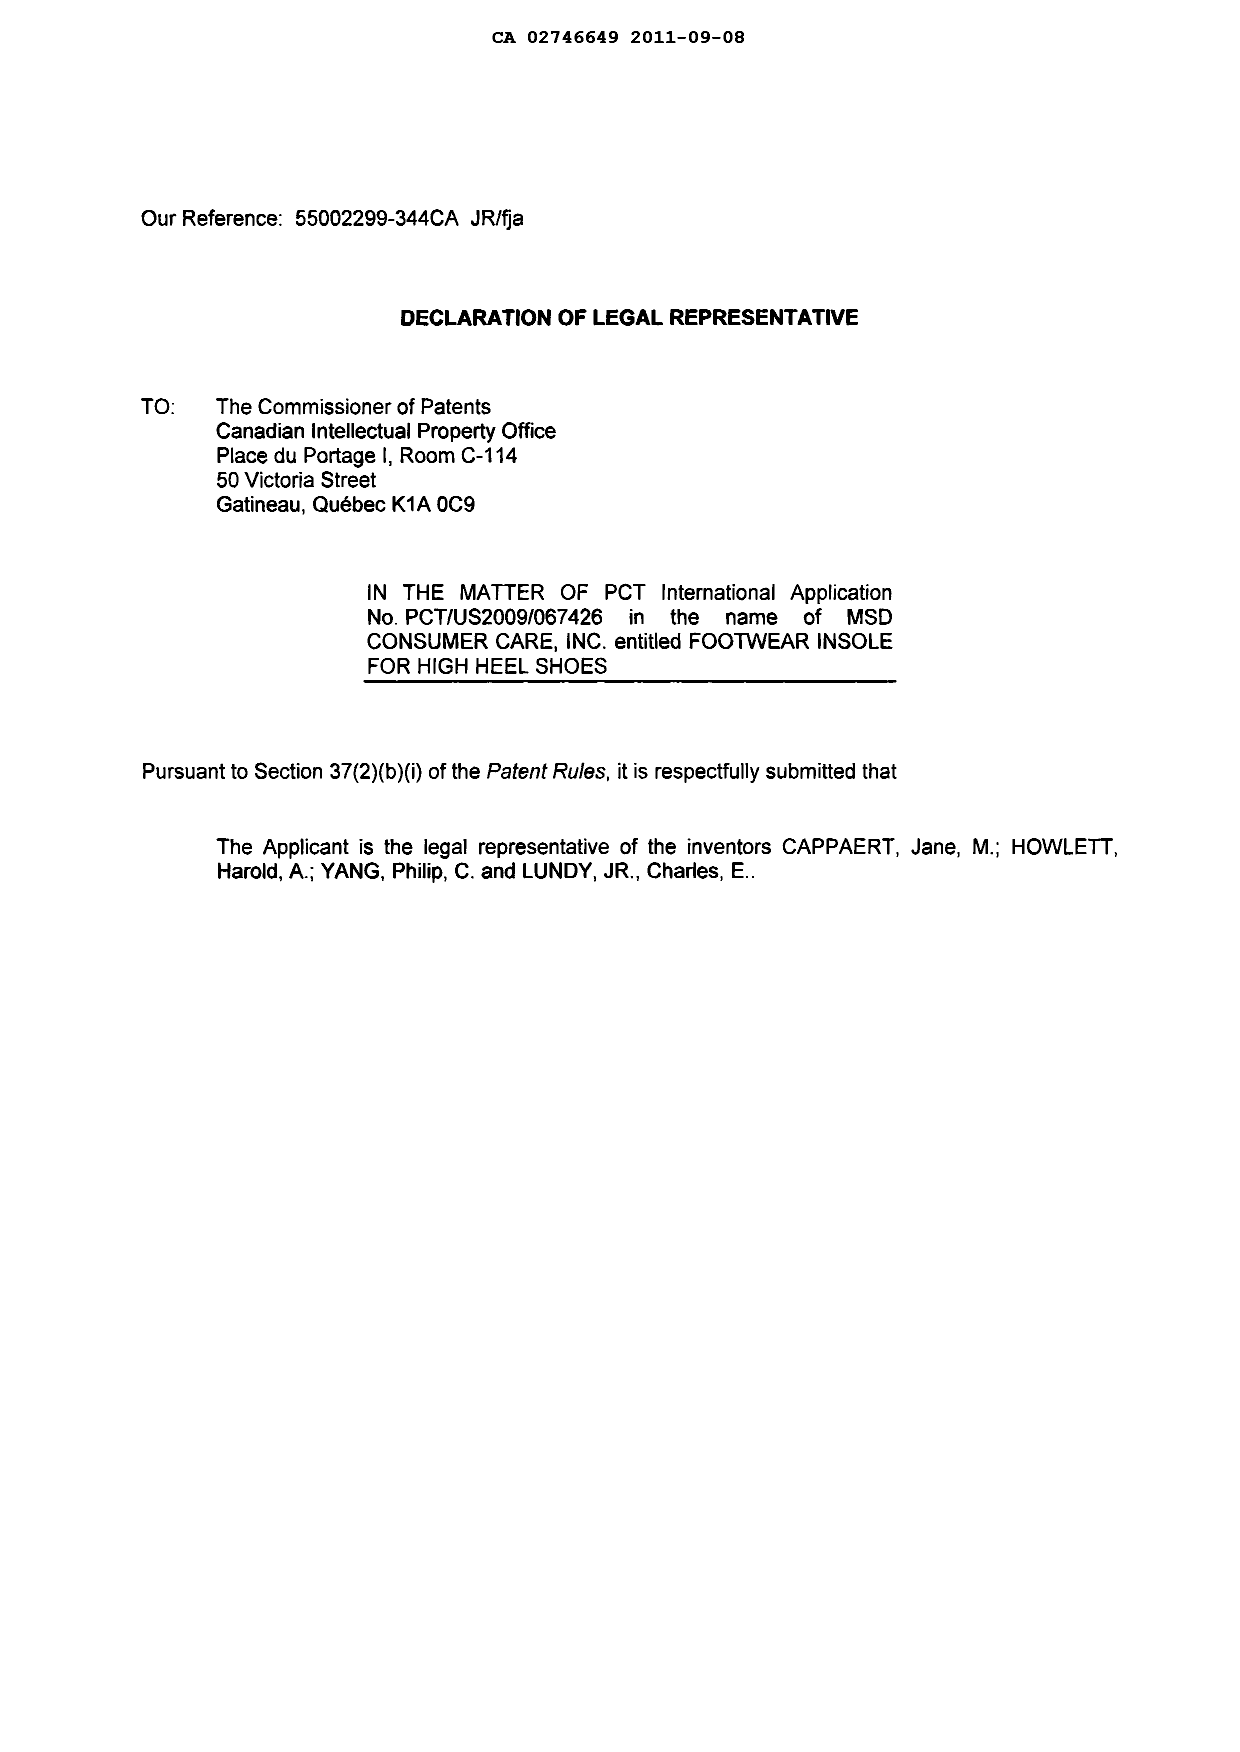 Canadian Patent Document 2746649. Correspondence 20101208. Image 3 of 3